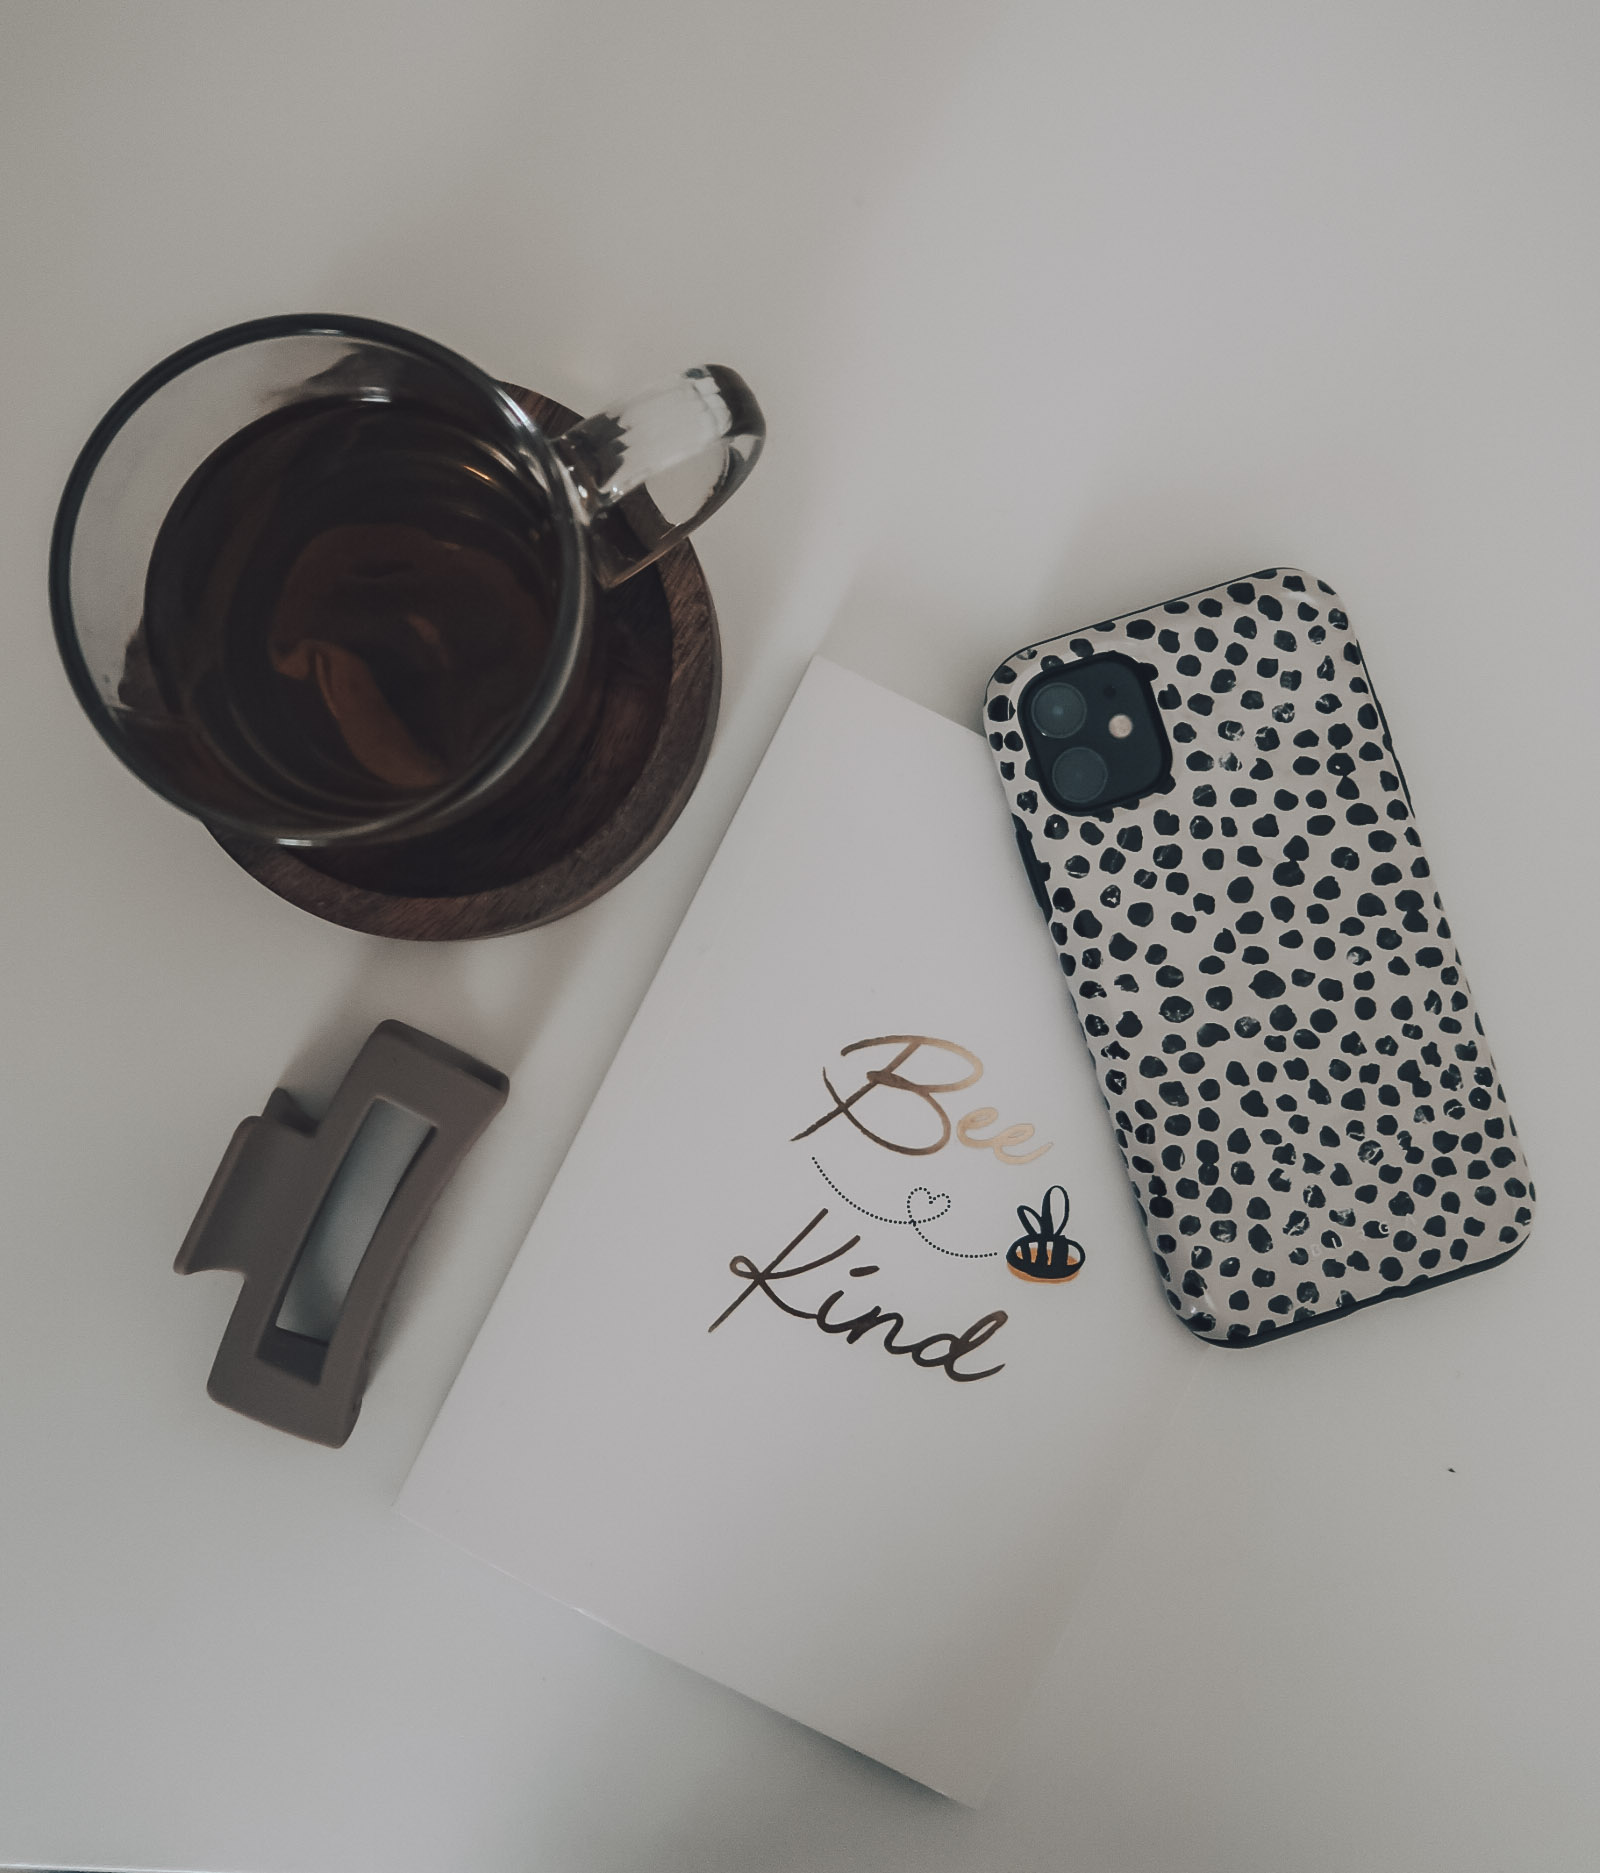 A 'Bee Kind' notebook, Iphone, mug of tea and beige hairclip.